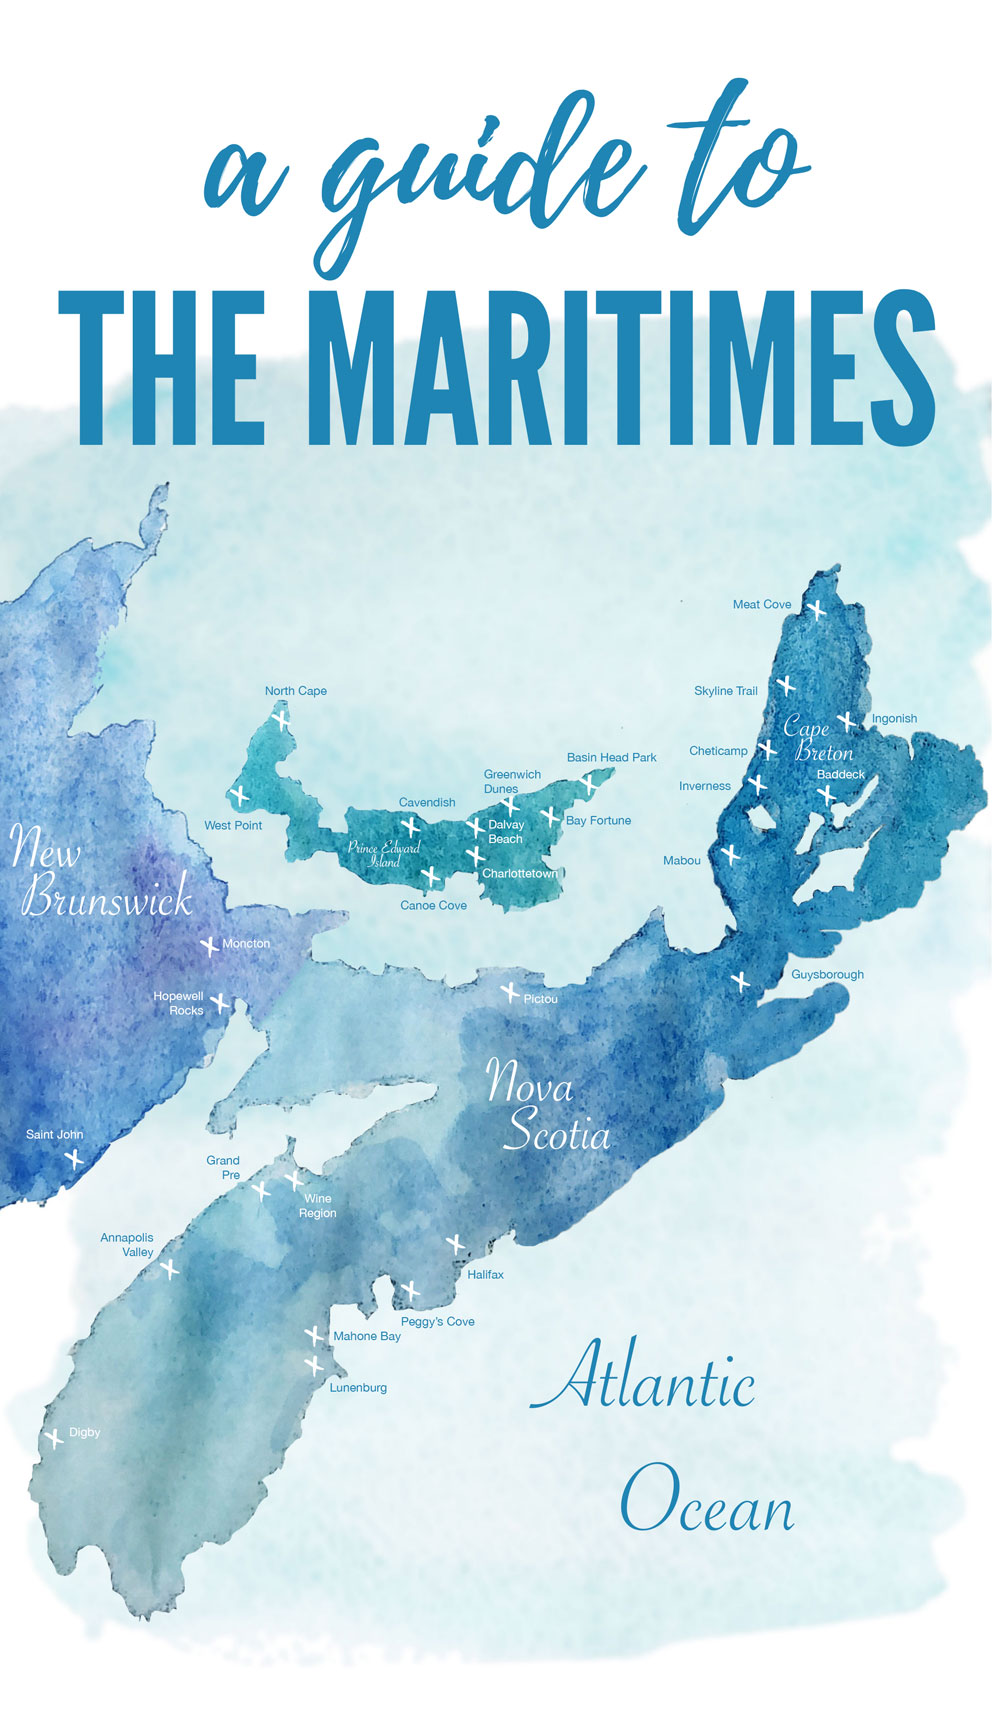 Maritimes travel guide